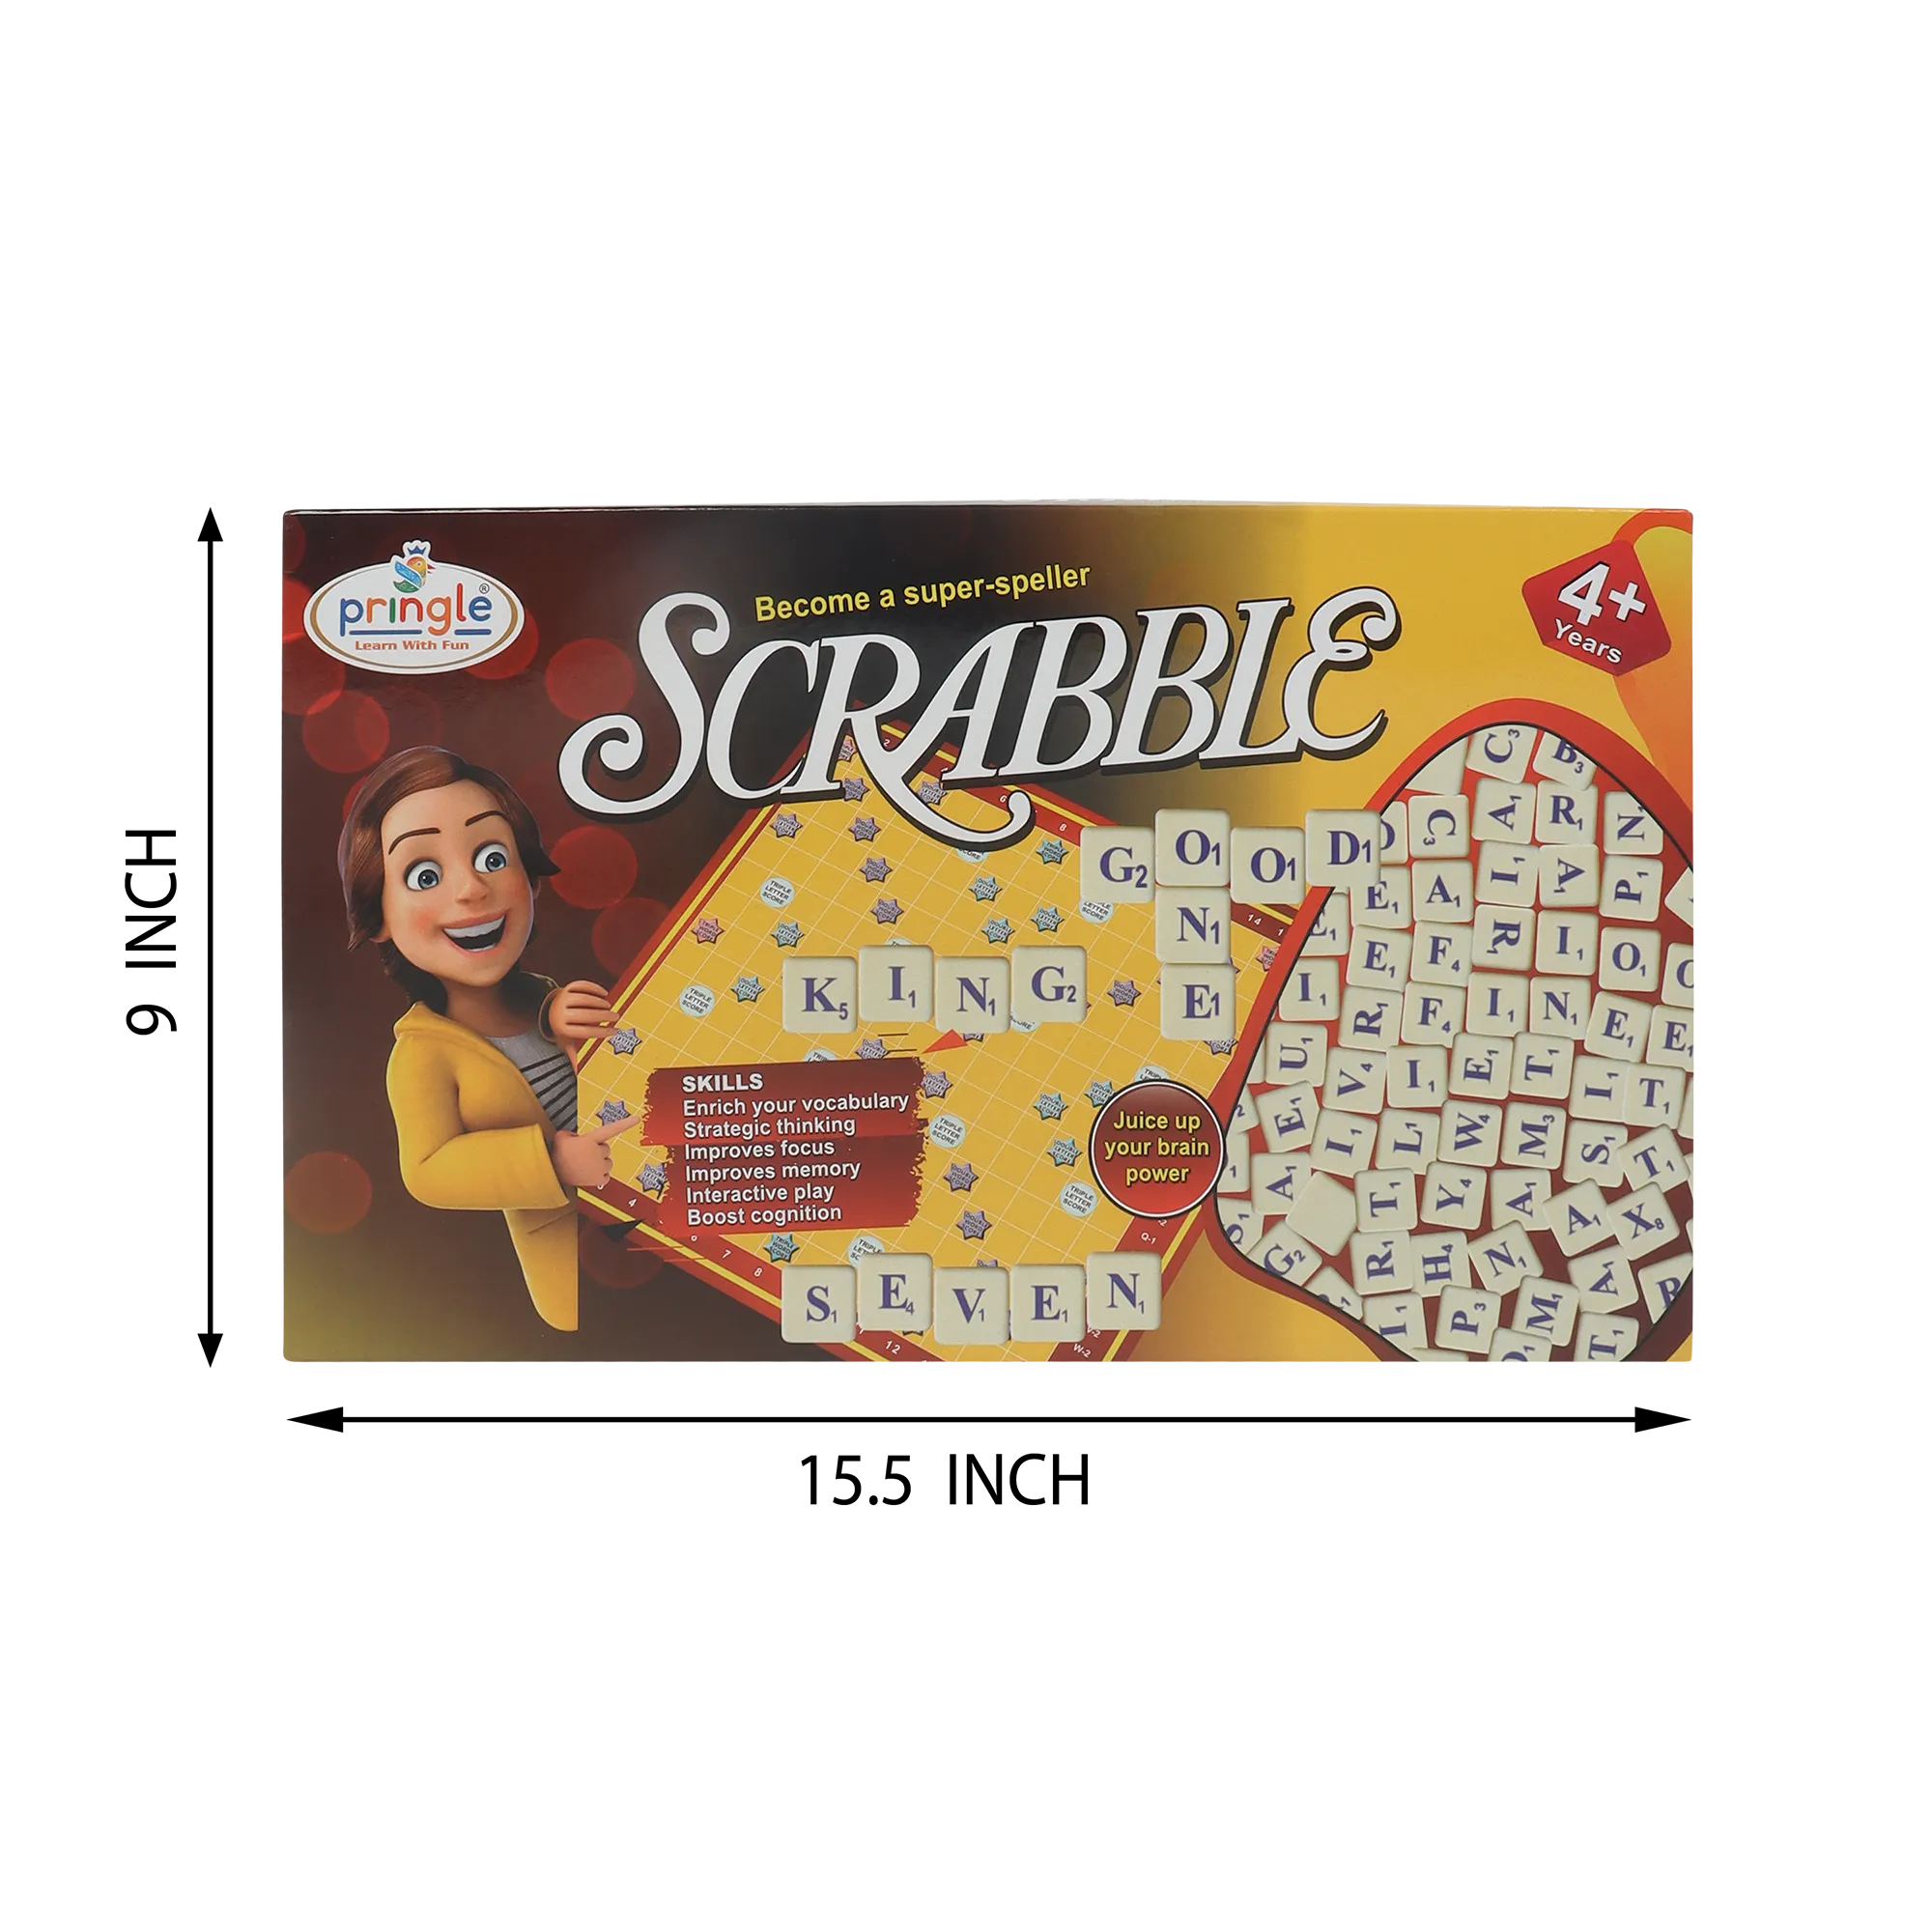 PR09 Scrabble